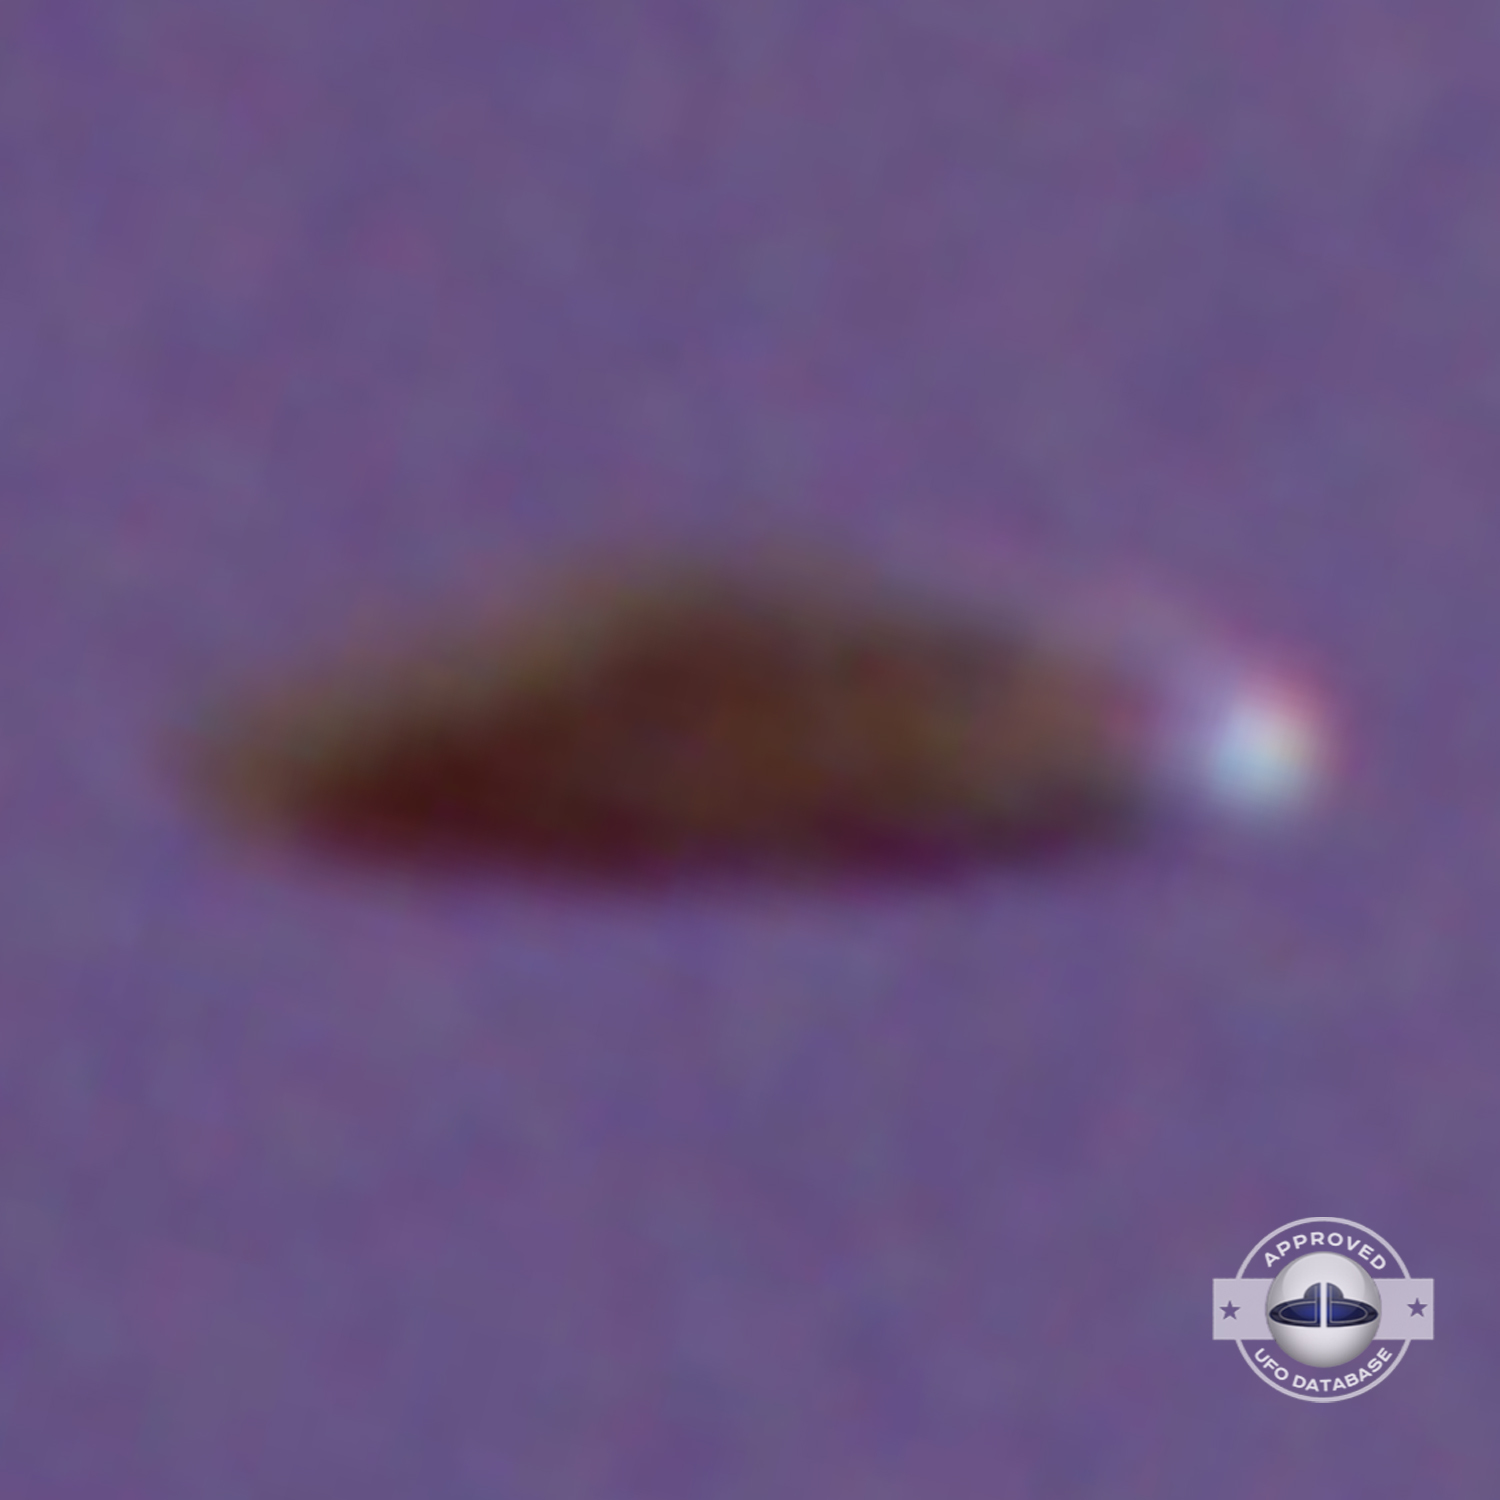 Rudi Nagora heard a strange noise and saw a shinning silver UFO UFO Picture #81-7